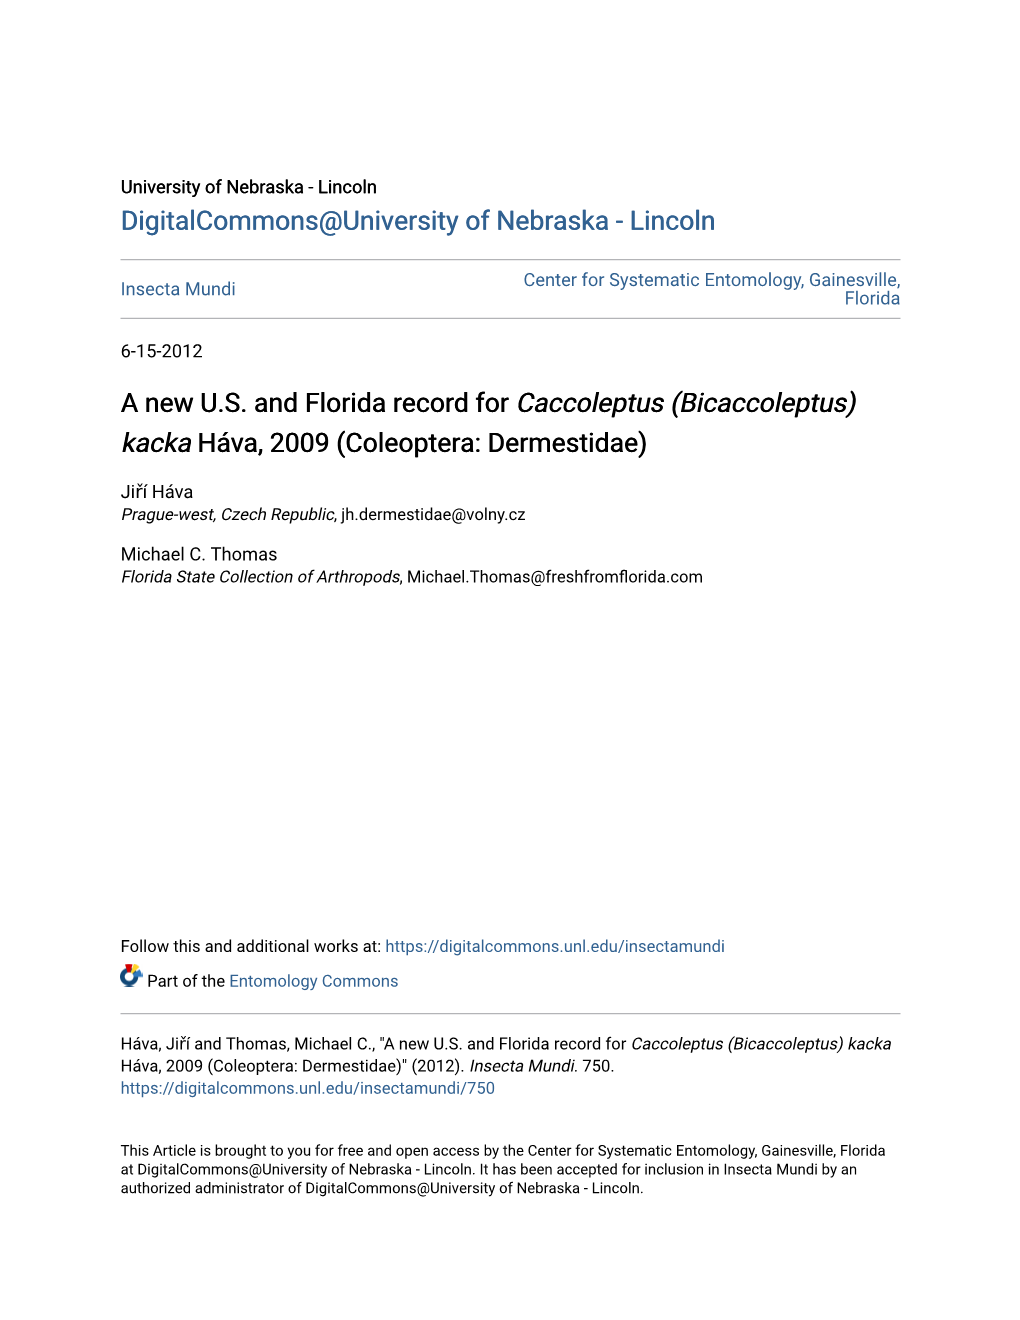 A New U.S. and Florida Record for Caccoleptus (Bicaccoleptus) Kacka Háva, 2009 (Coleoptera: Dermestidae)